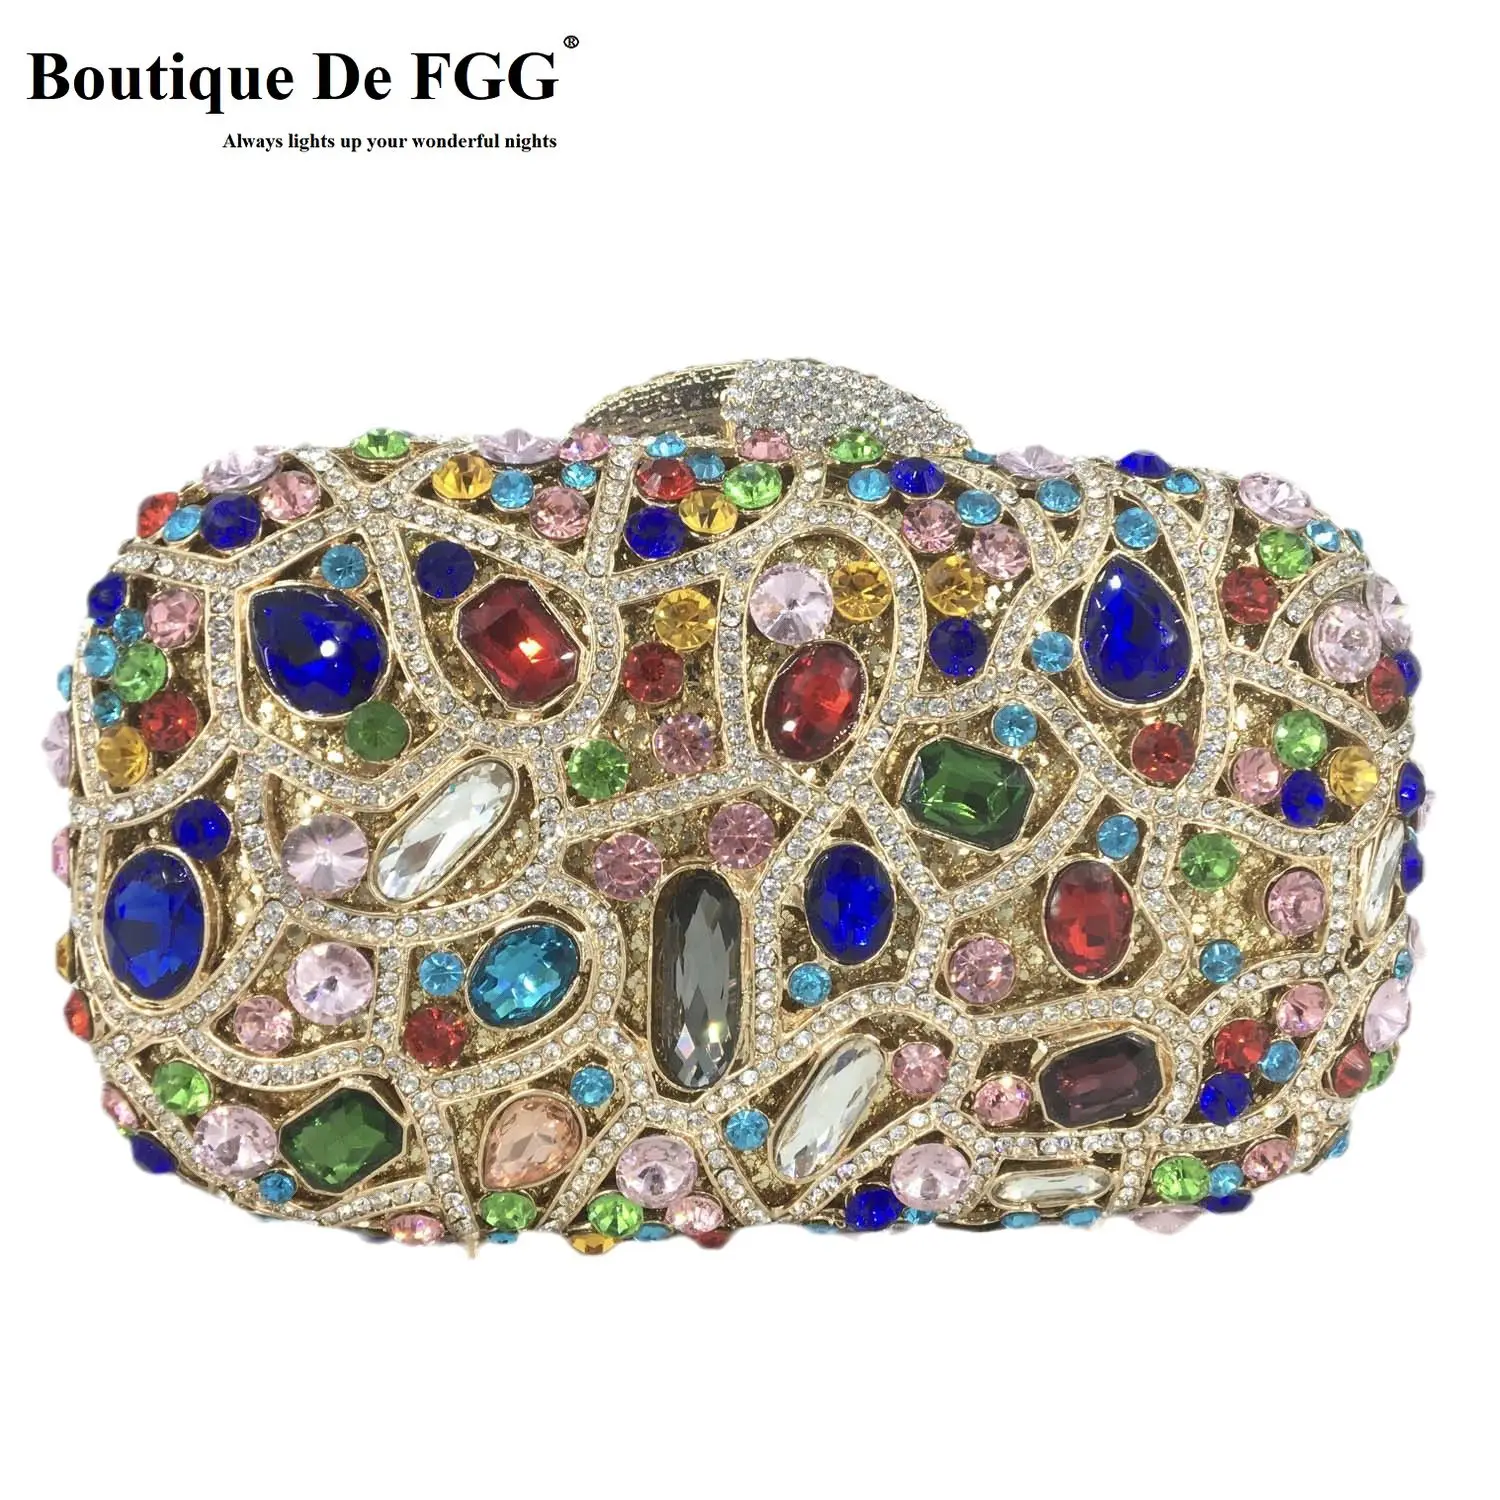 Boutique De FGG Multicolored Women Crystal Evening Purses and Handbags Ladies Gala Dinner Handbags Wedding Clutch Minaudiere